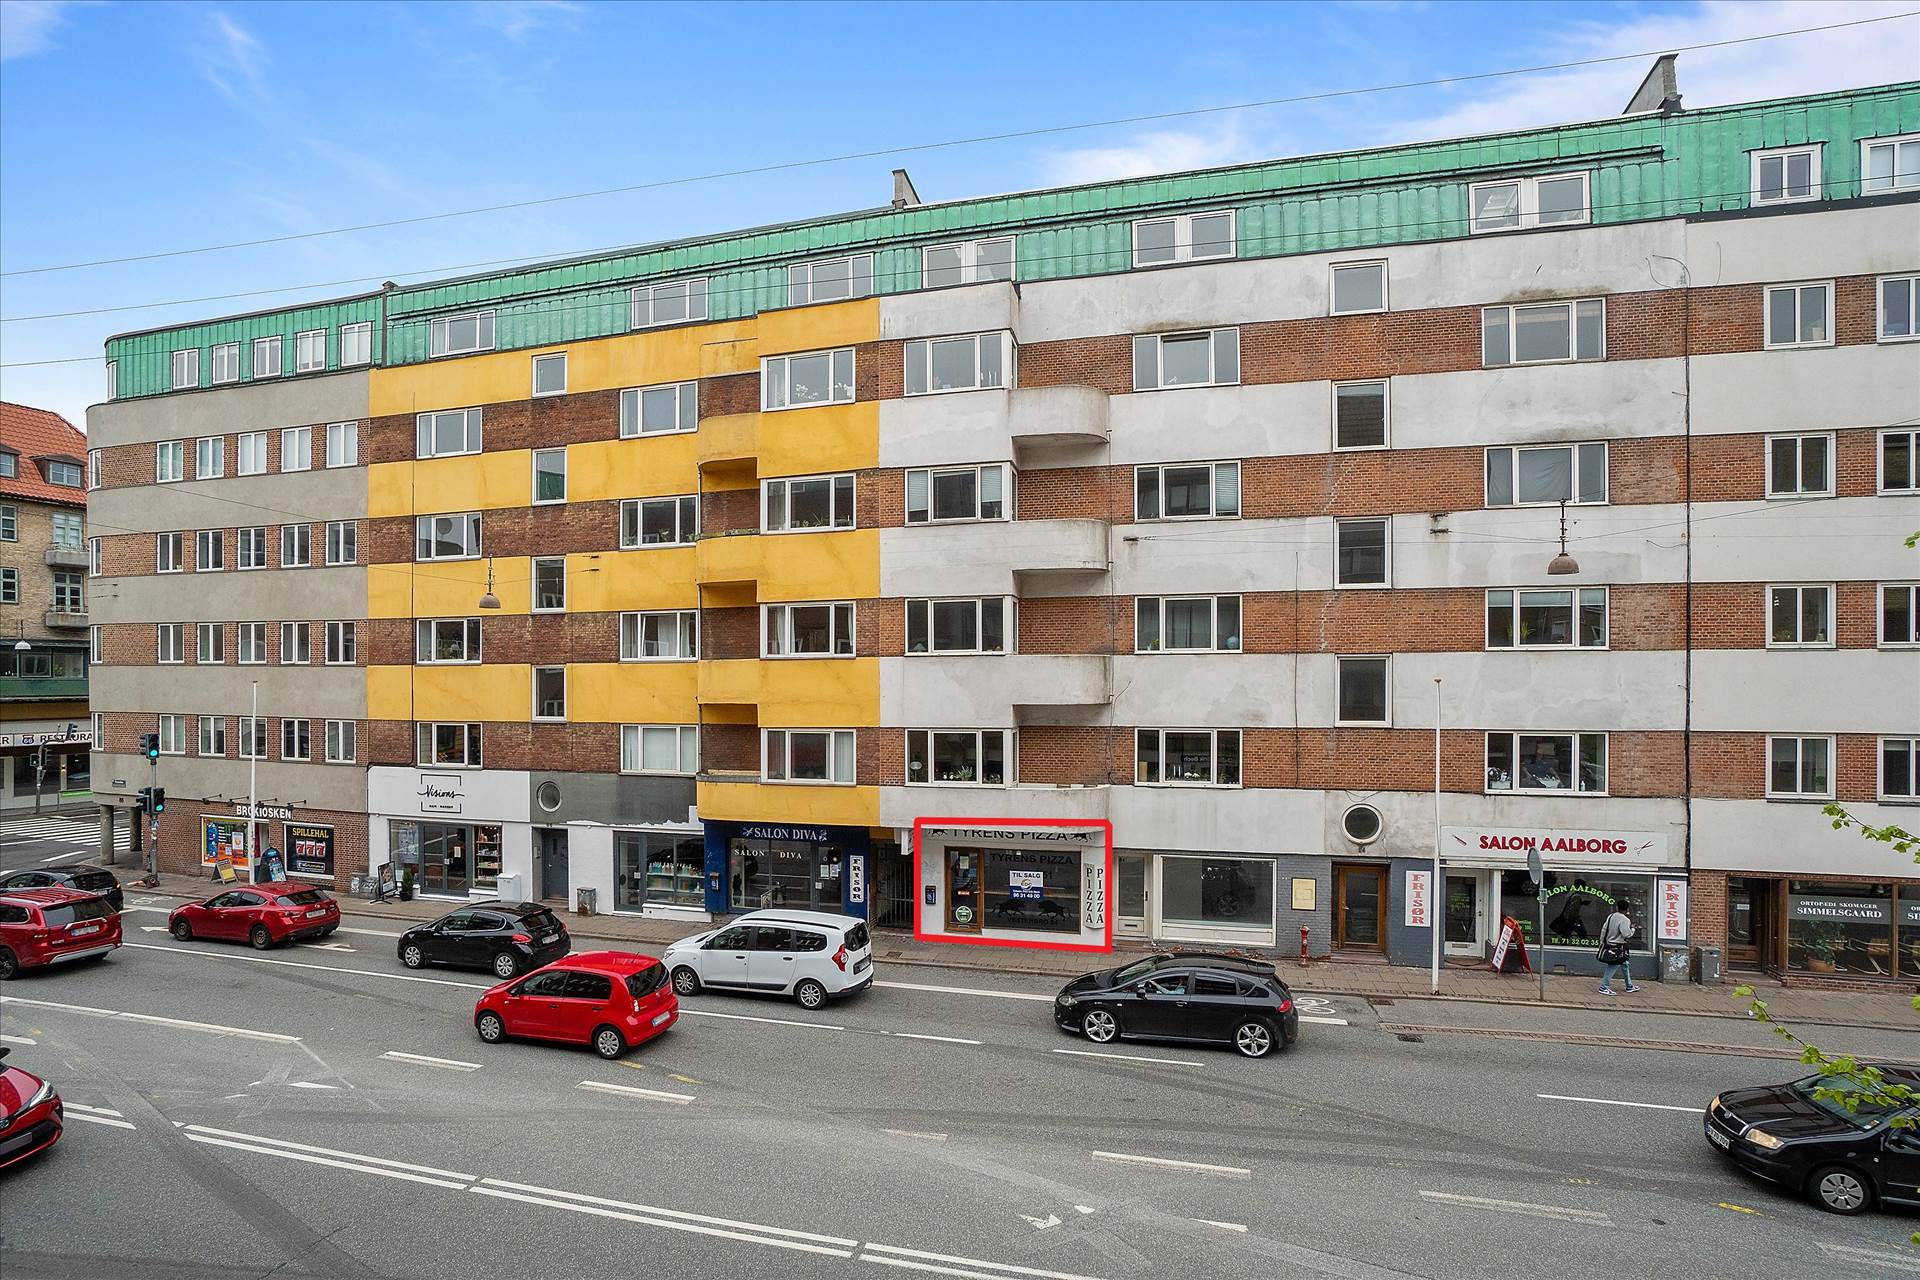 Hotel og restaurant til salg - Vesterbro 84 ST TV,